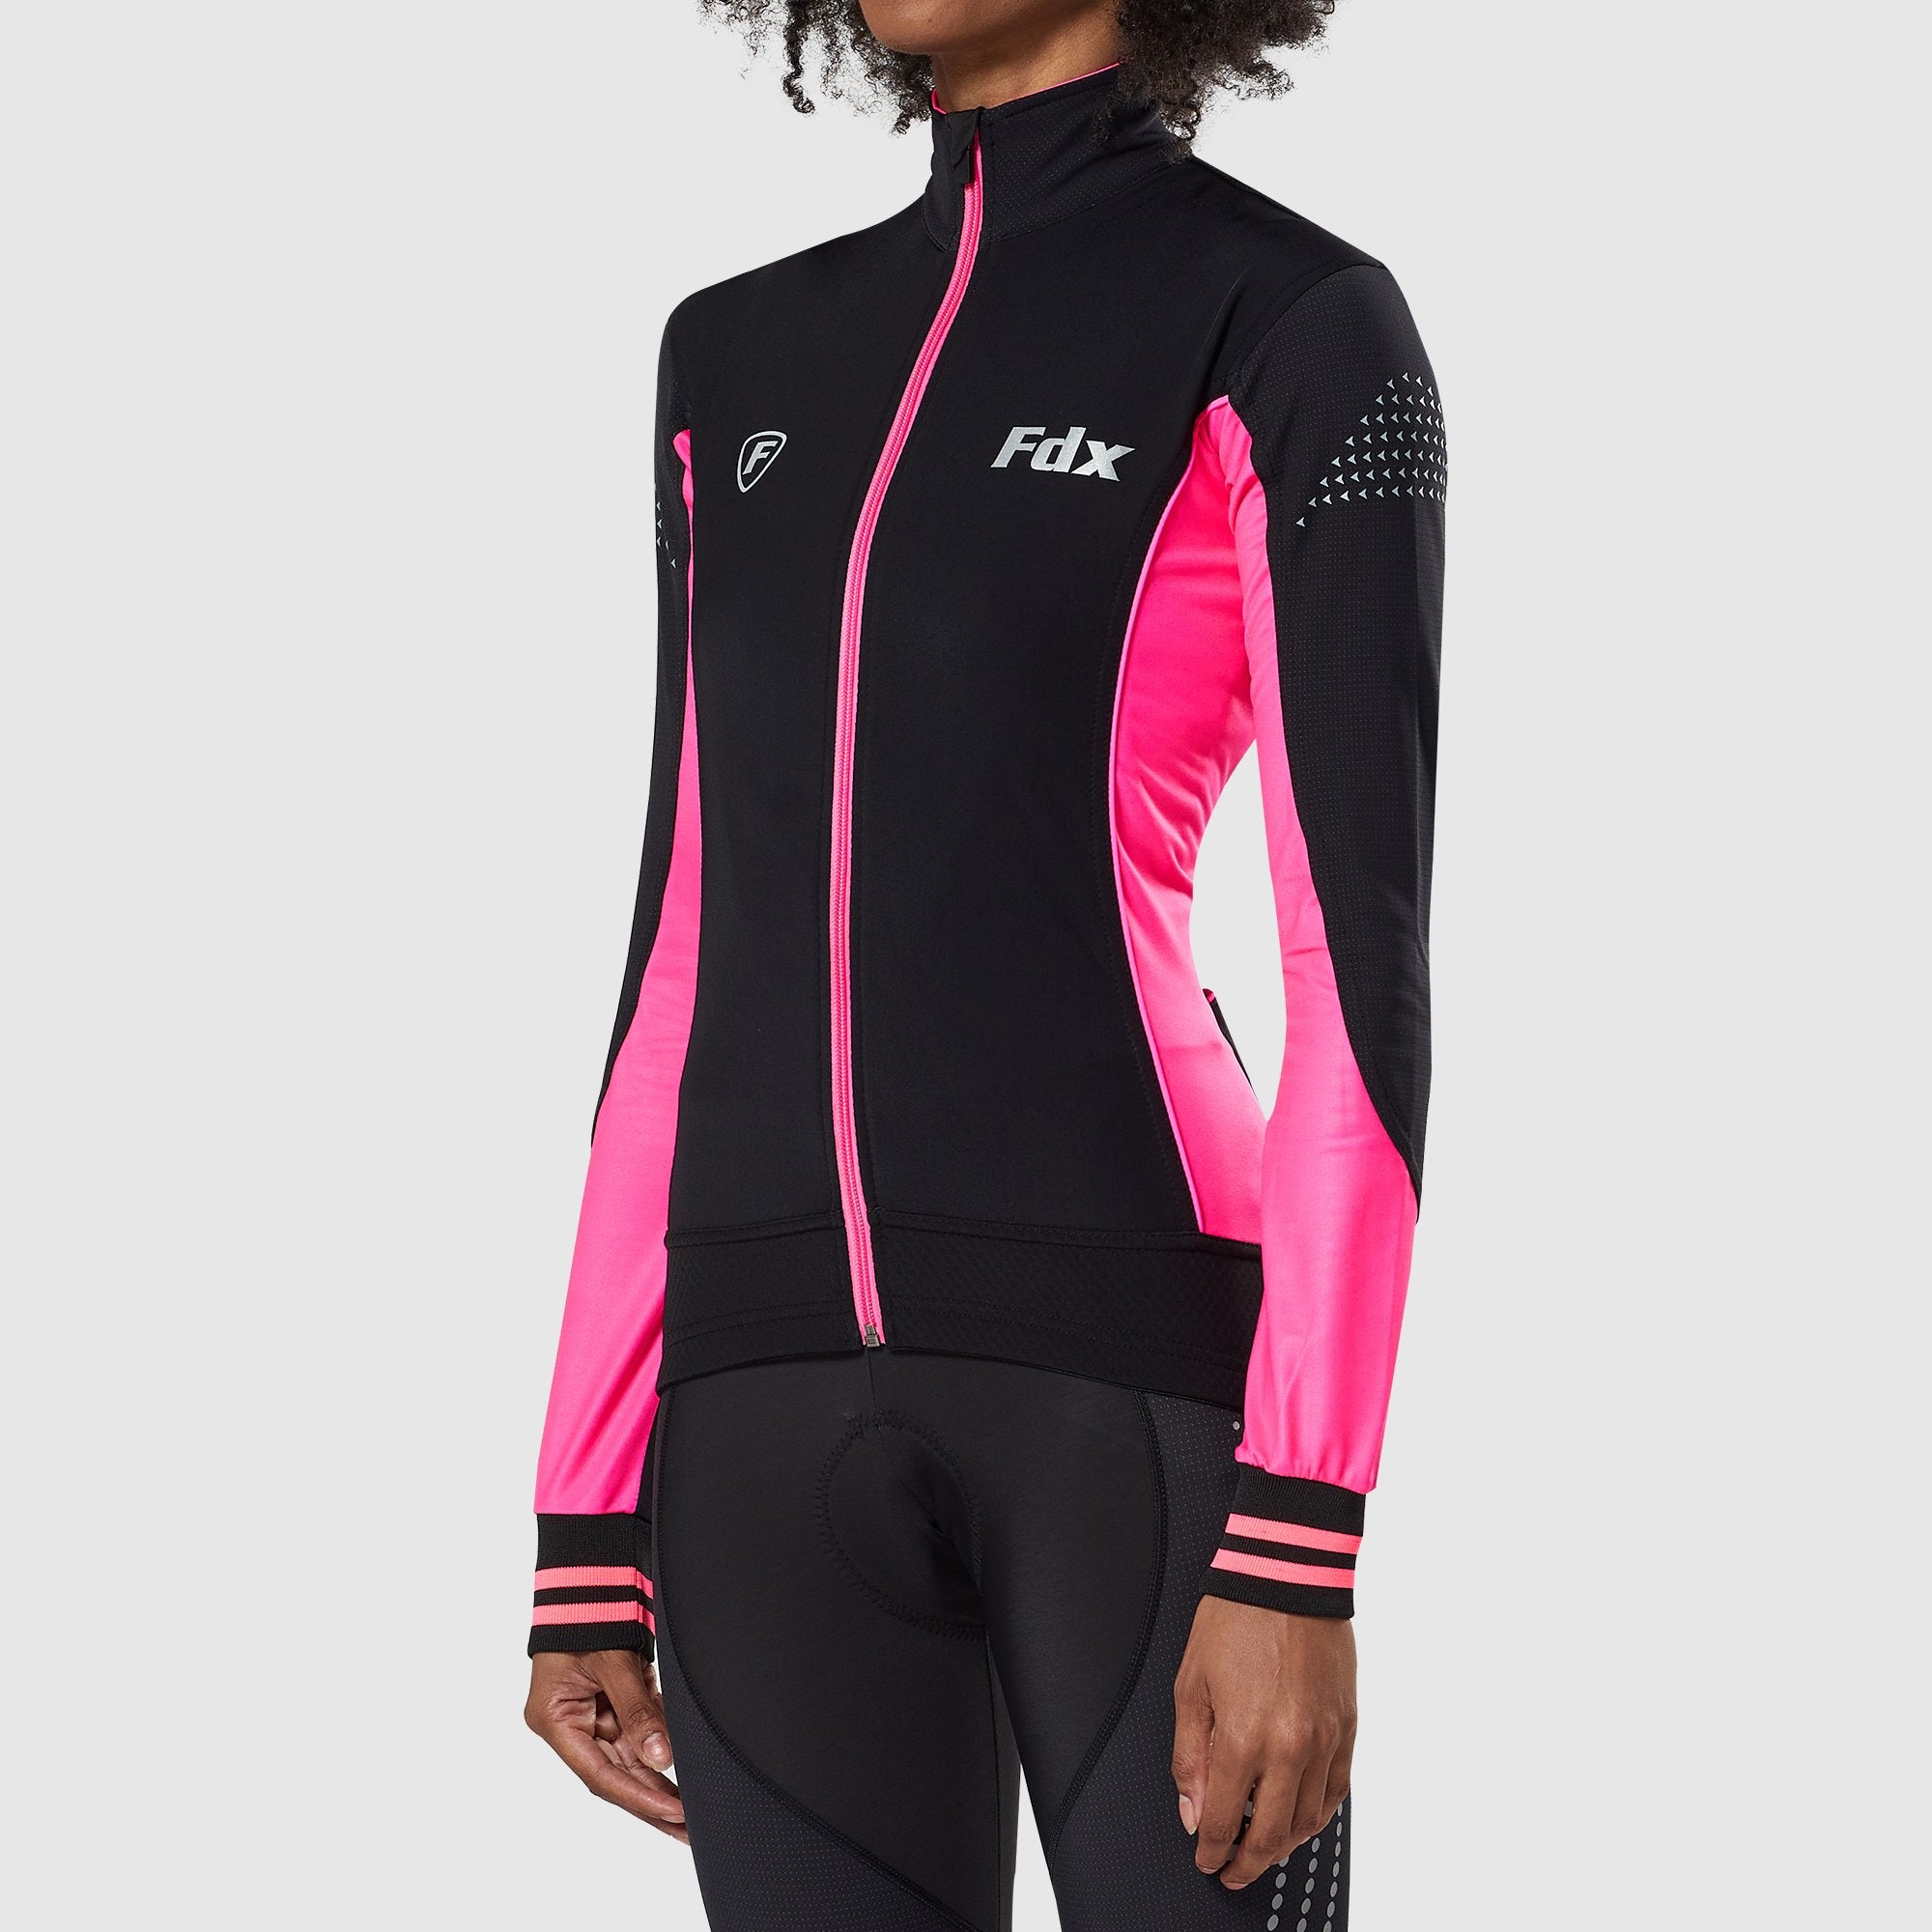 Fdx Thermodream Pink Women's Long Sleeve Winter Cycling Jersey